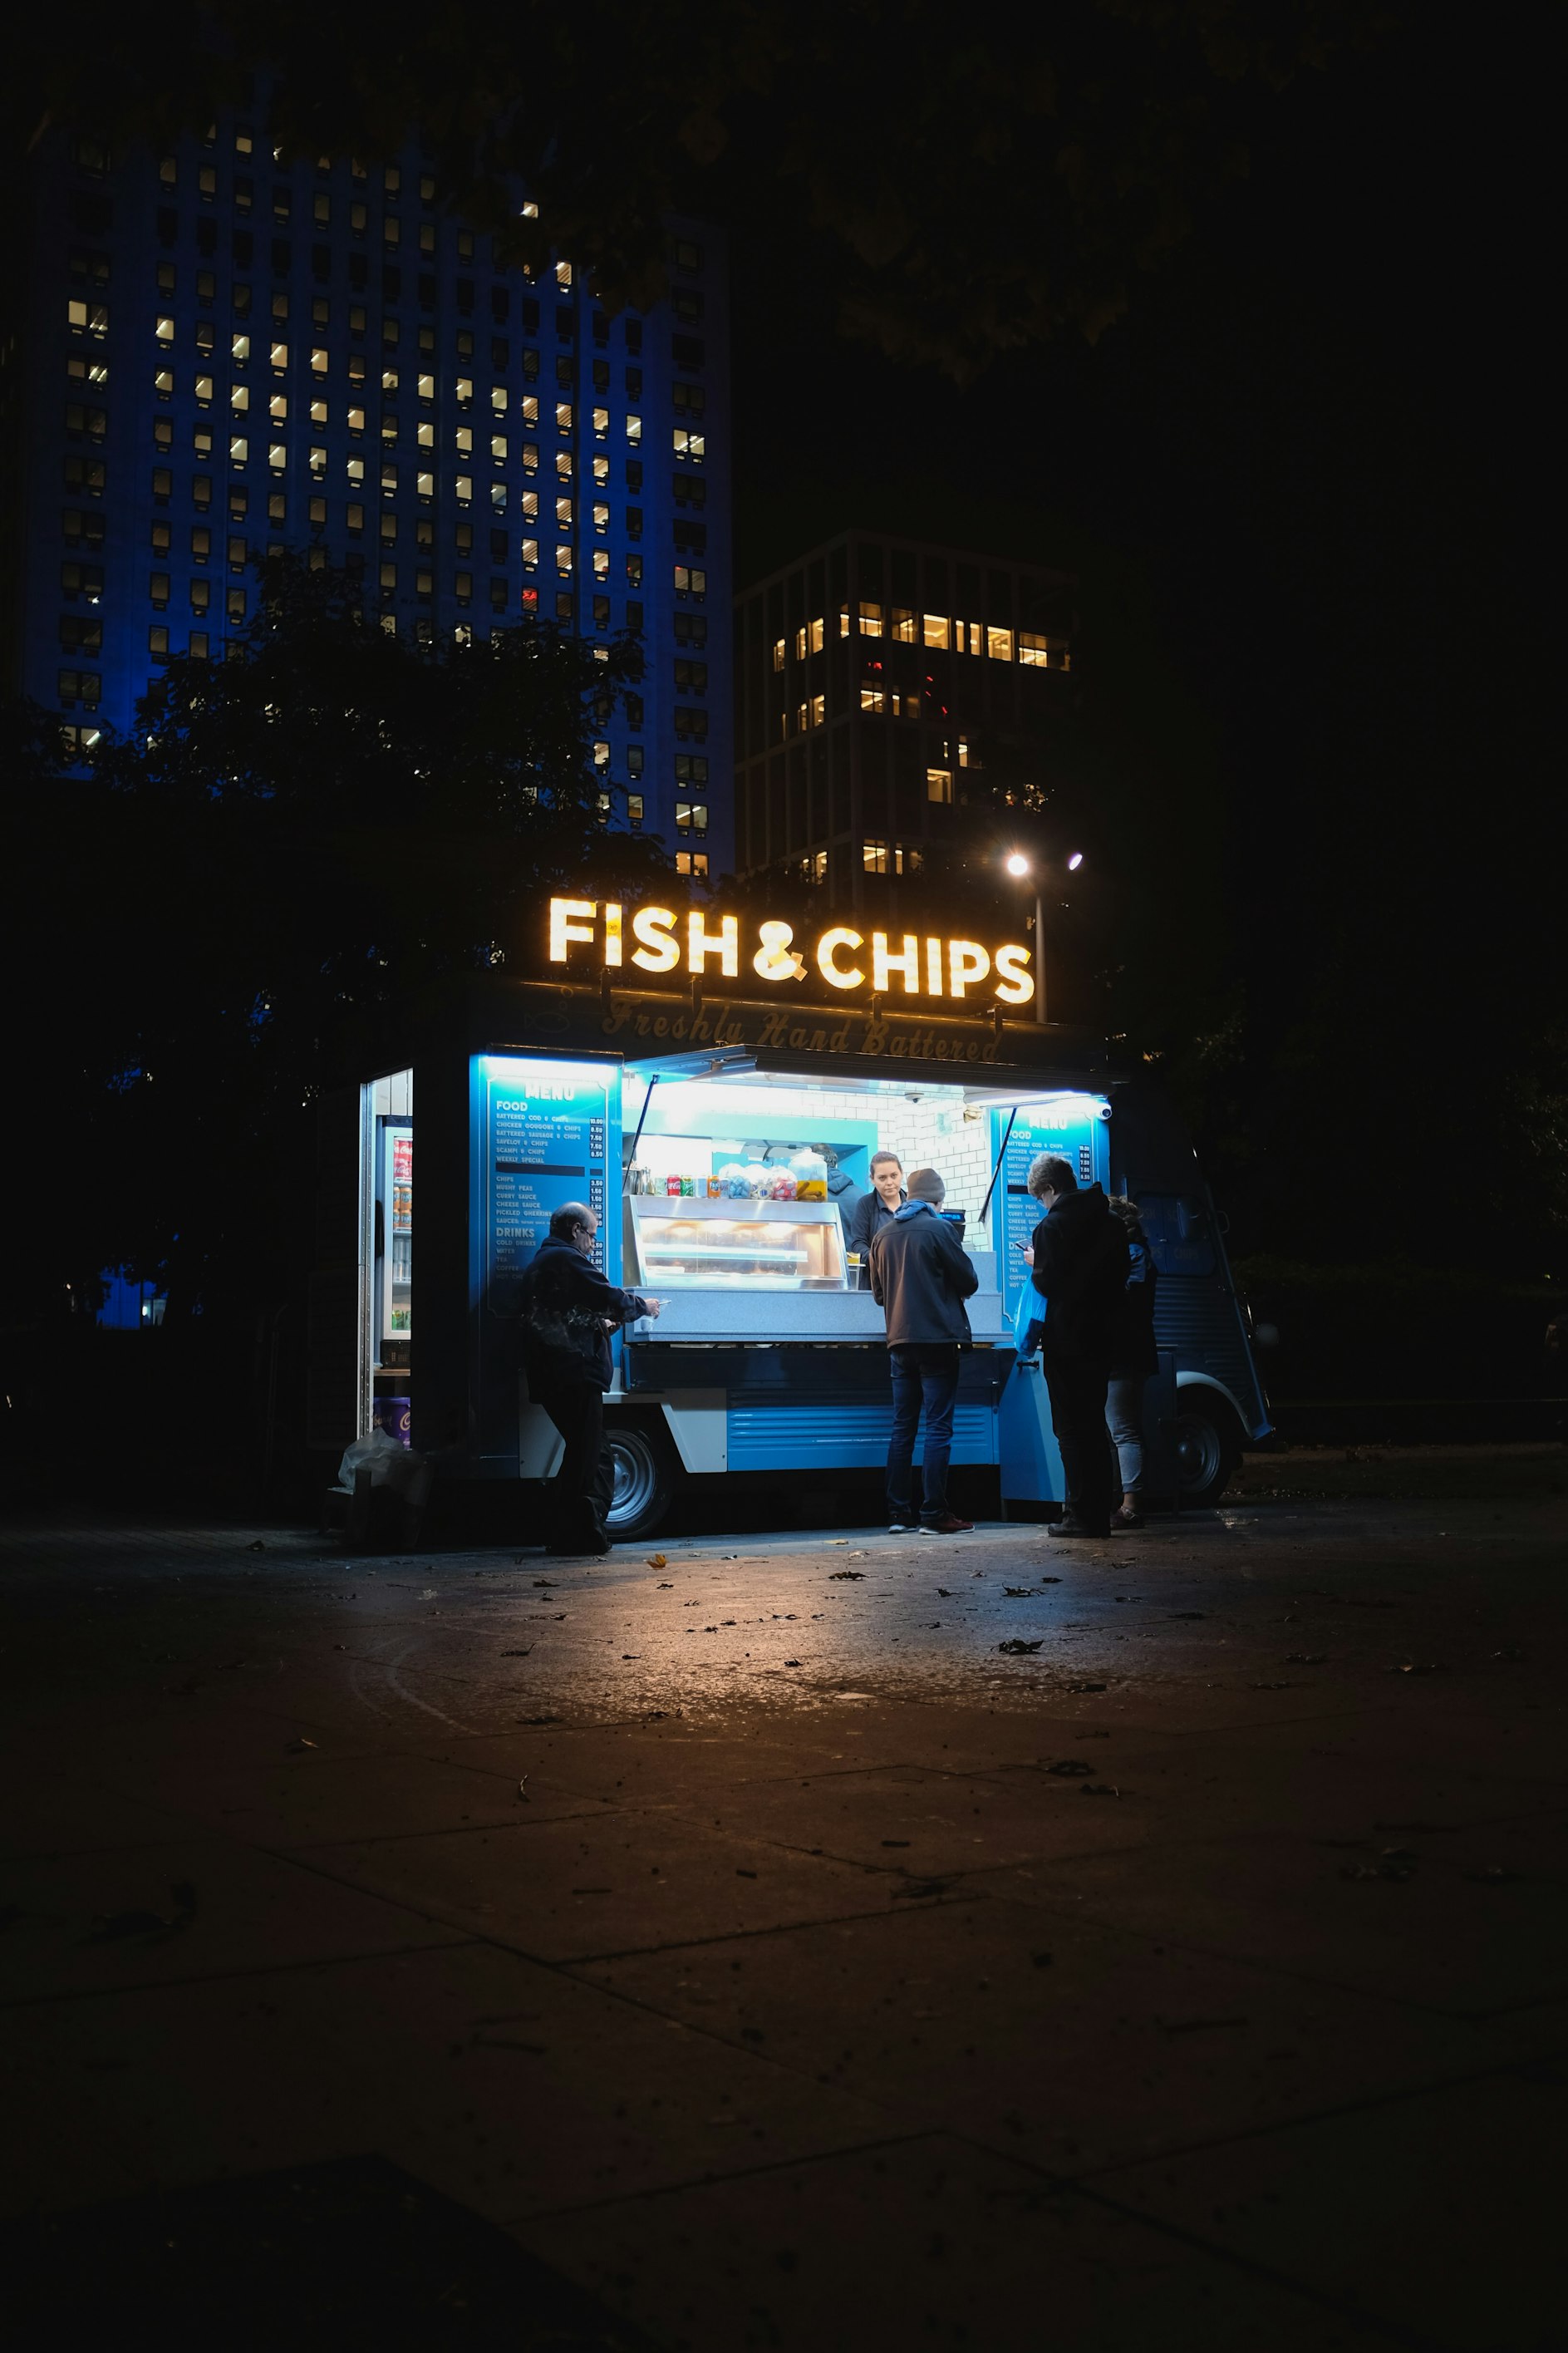 3 shadowy figures at a fish and chip van at night